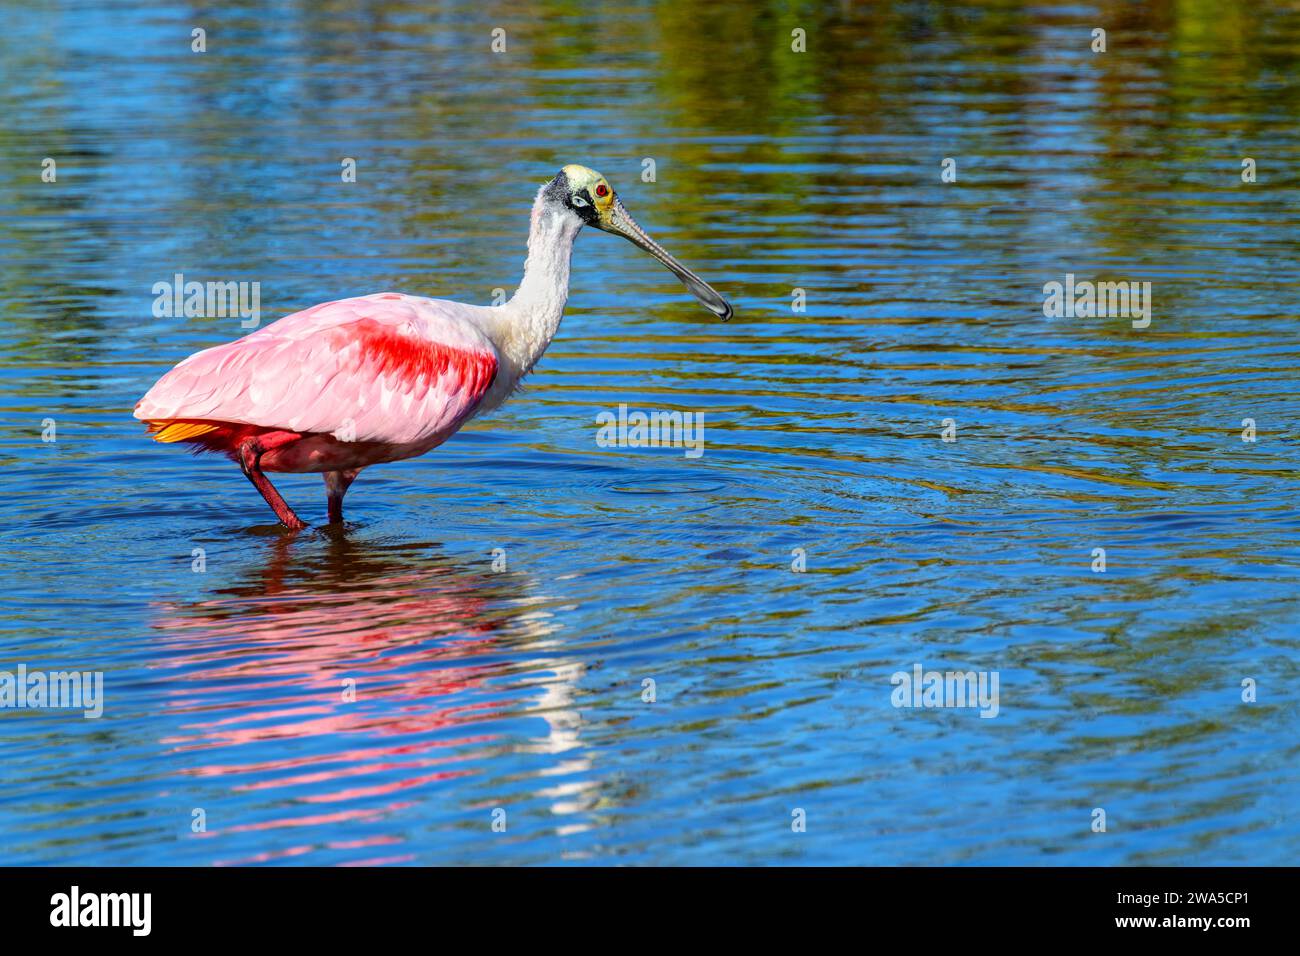 Roseate Spoonbill (Platalea ajaja) standing in water with reflection, Merrit island, Florida, USA. Stock Photo